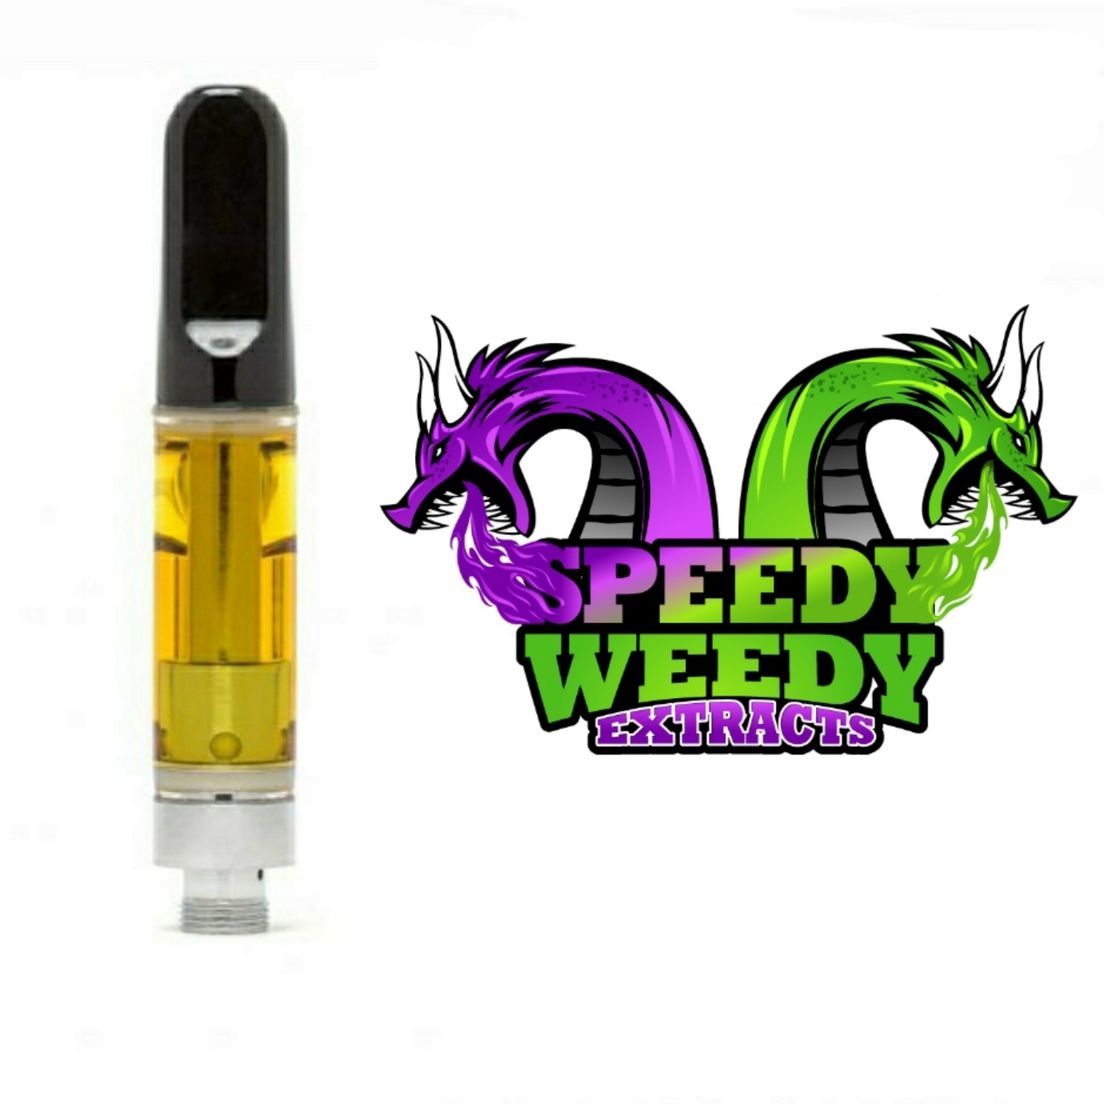 1. Speedy Weedy 1g Cartridge - Blue Dream